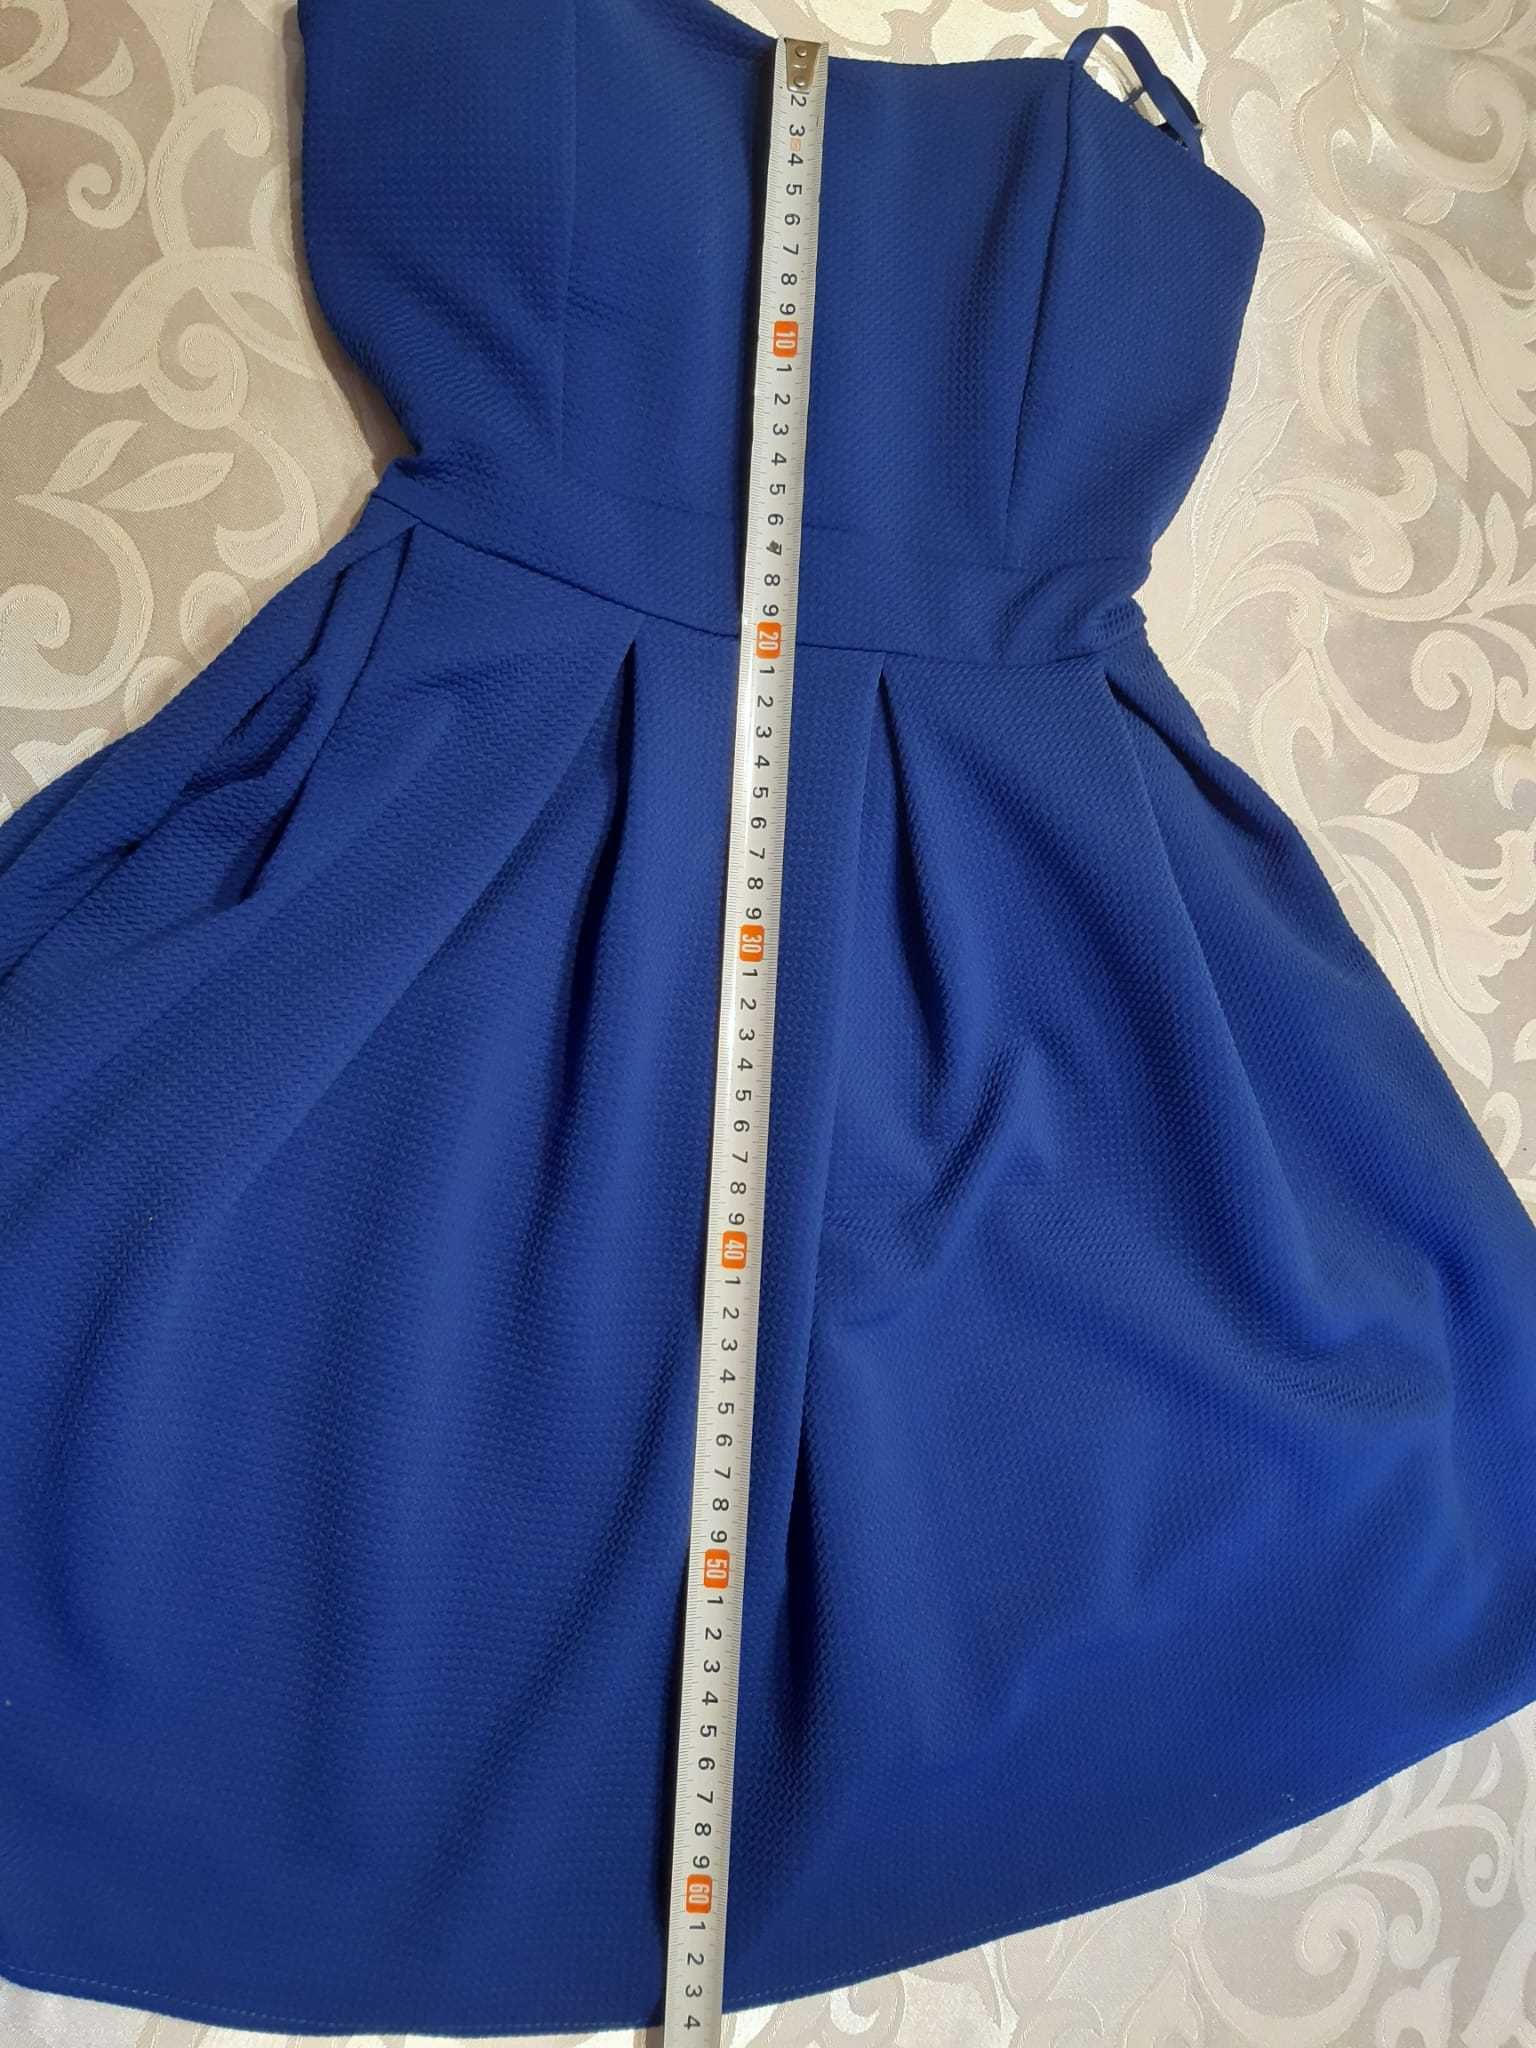 Ciemnoniebieska/granatowa sukienka, rozmiar S